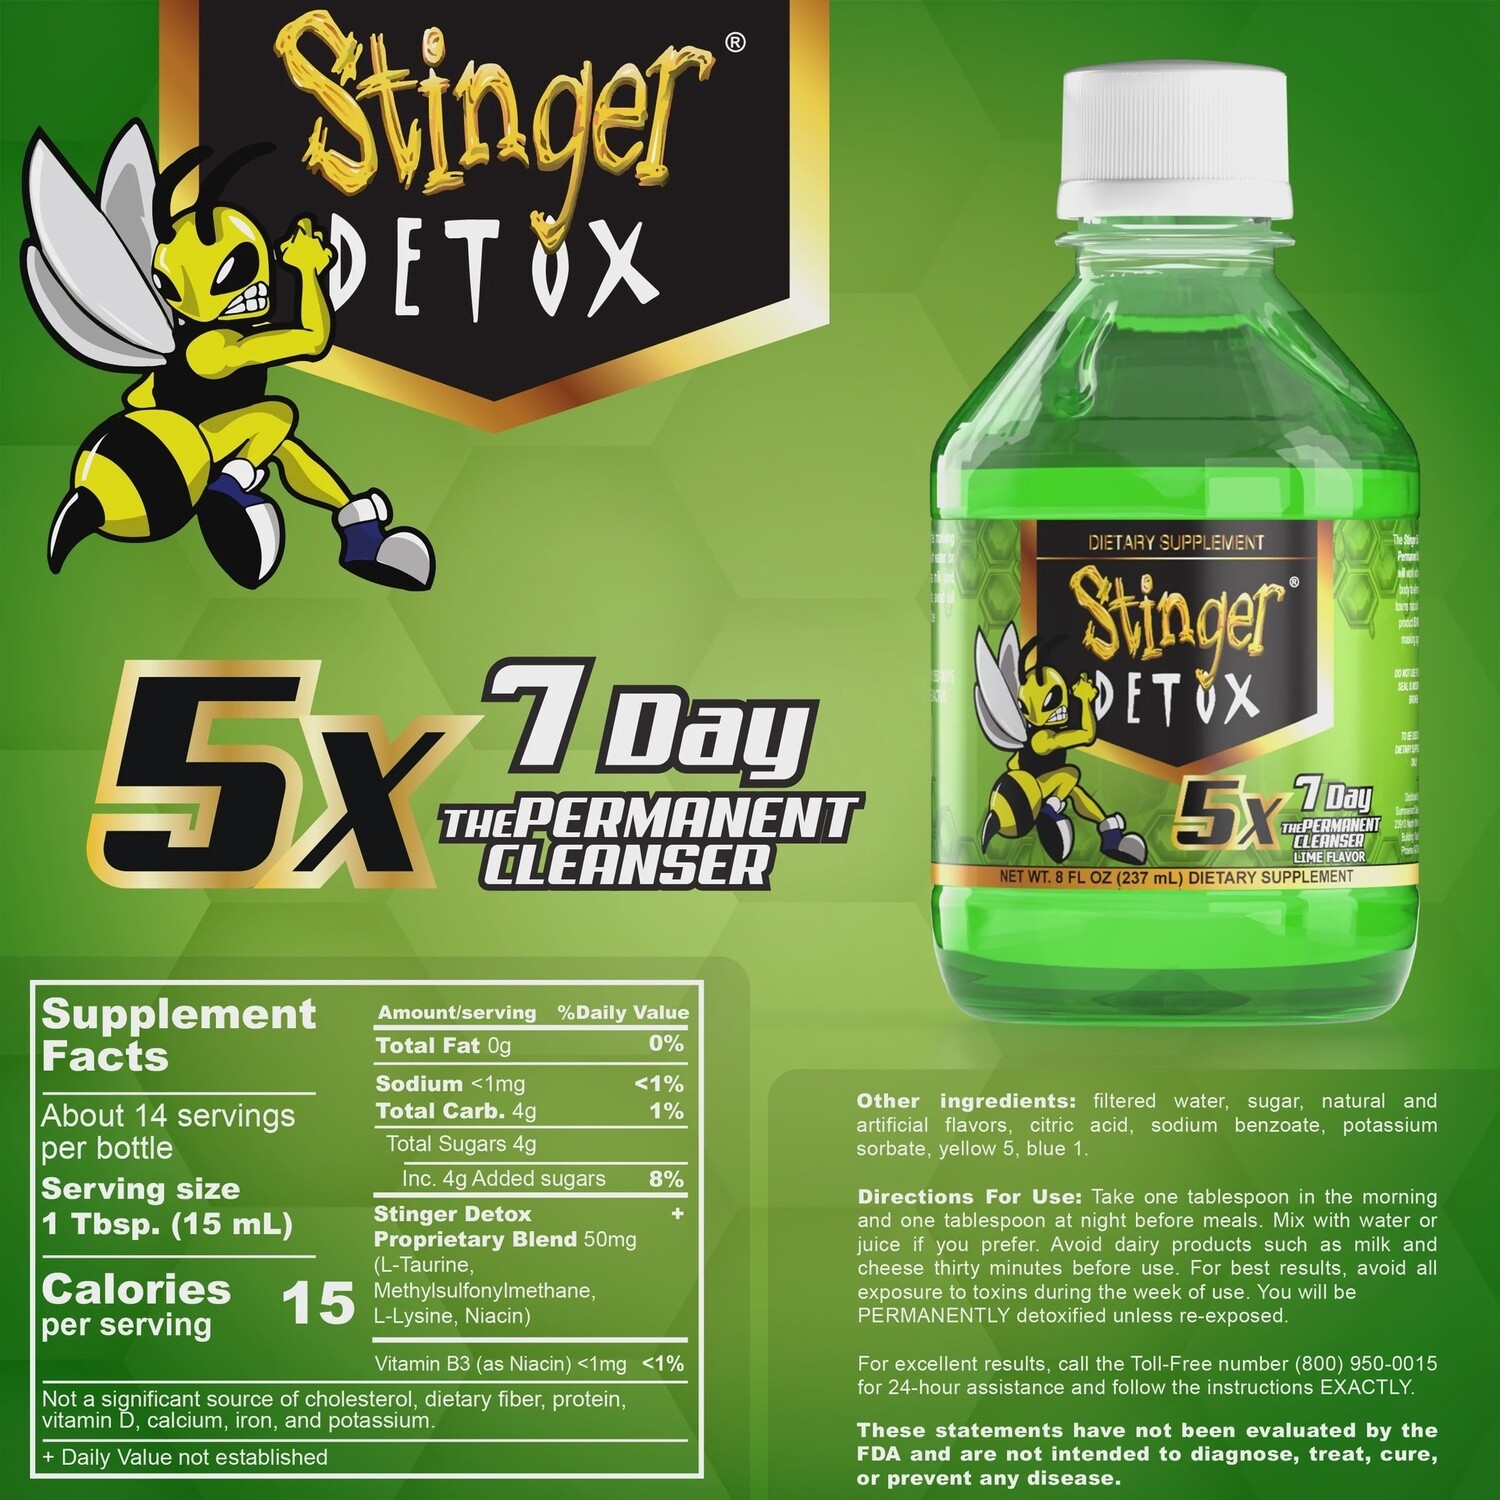 Stinger Detox 7-Day Permanent Cleanser, Flavor: Lime